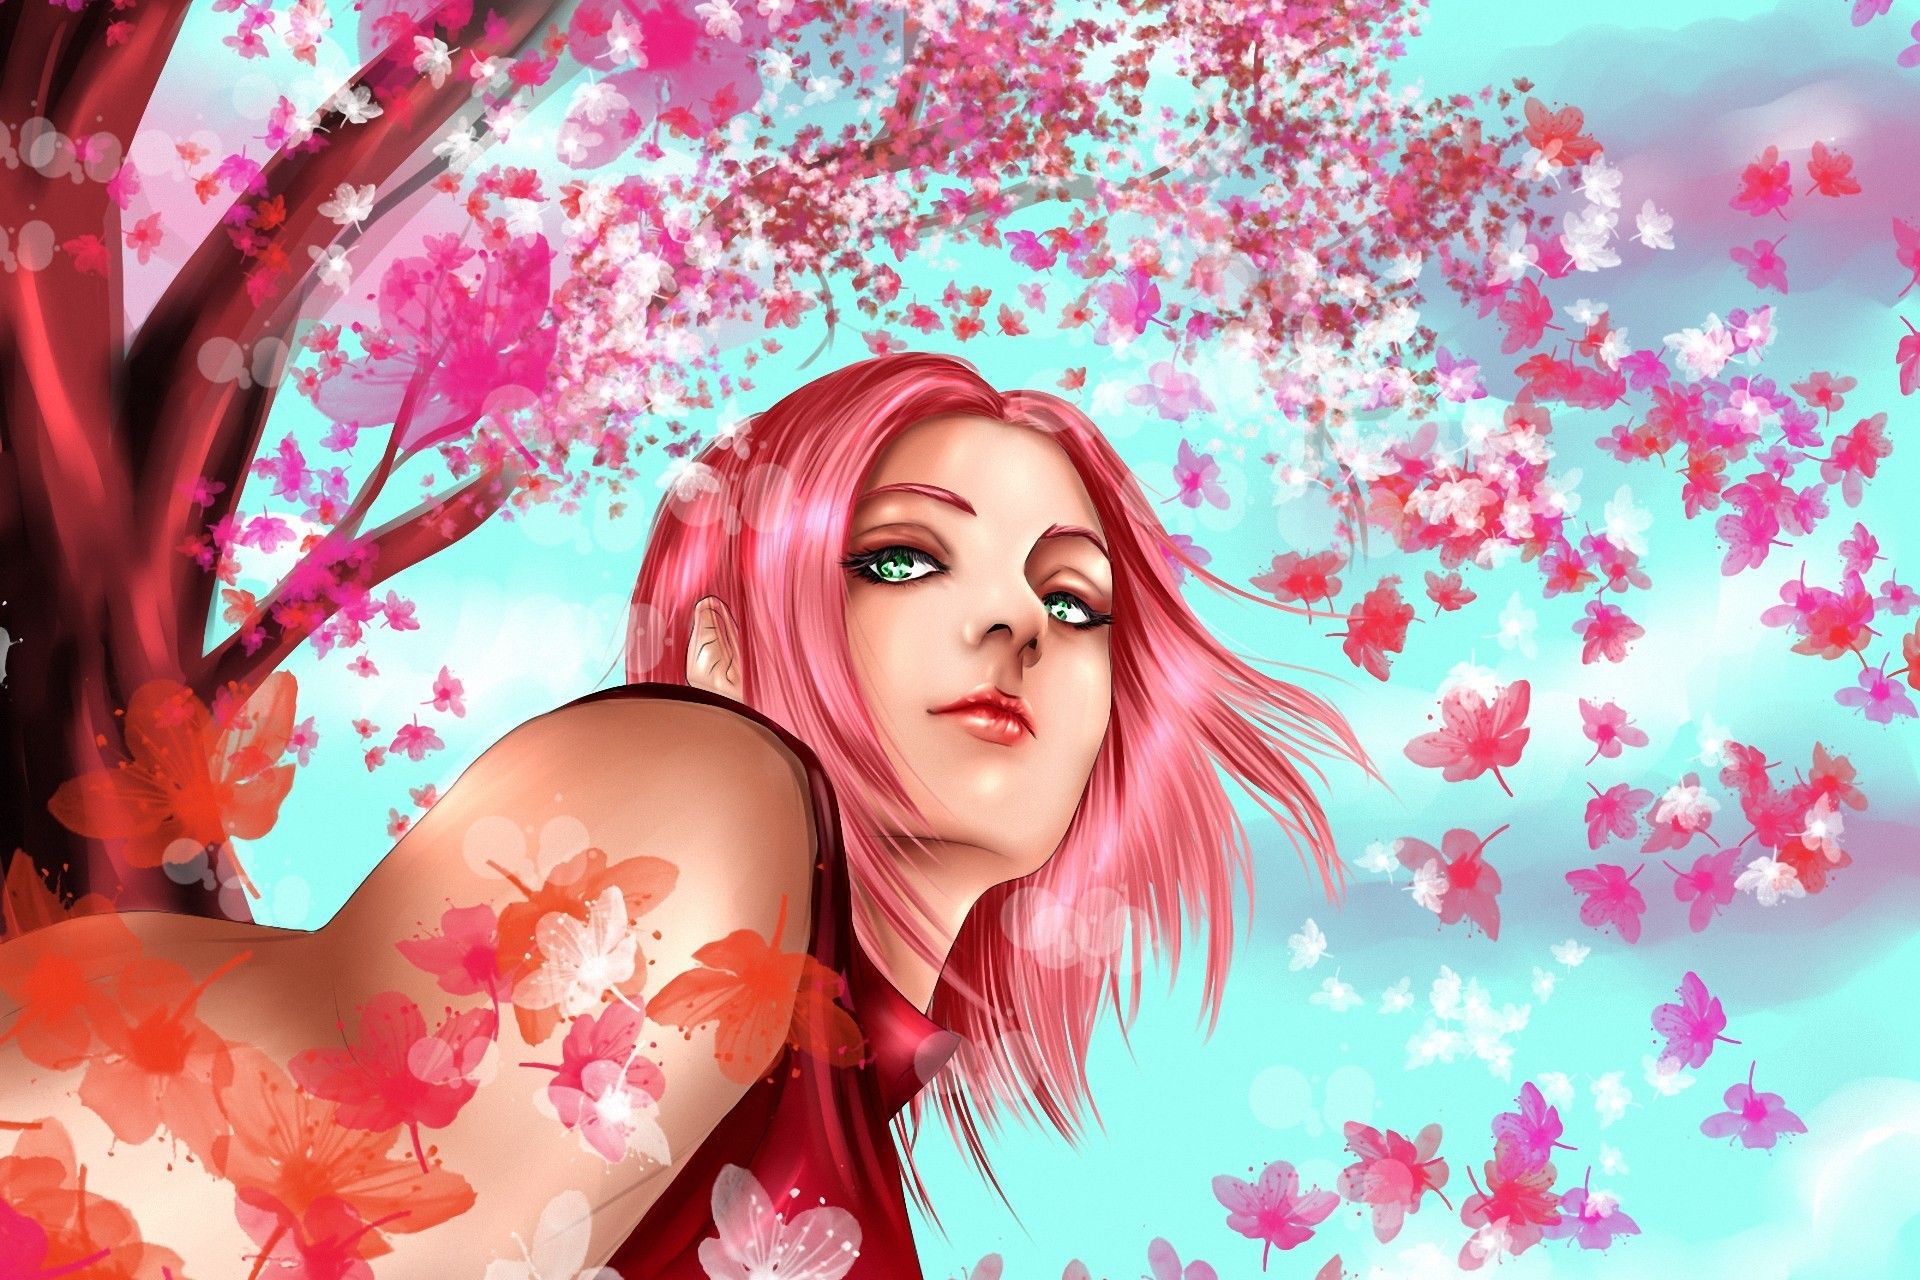 Sakura, naruto wallpaper and image, picture, photo